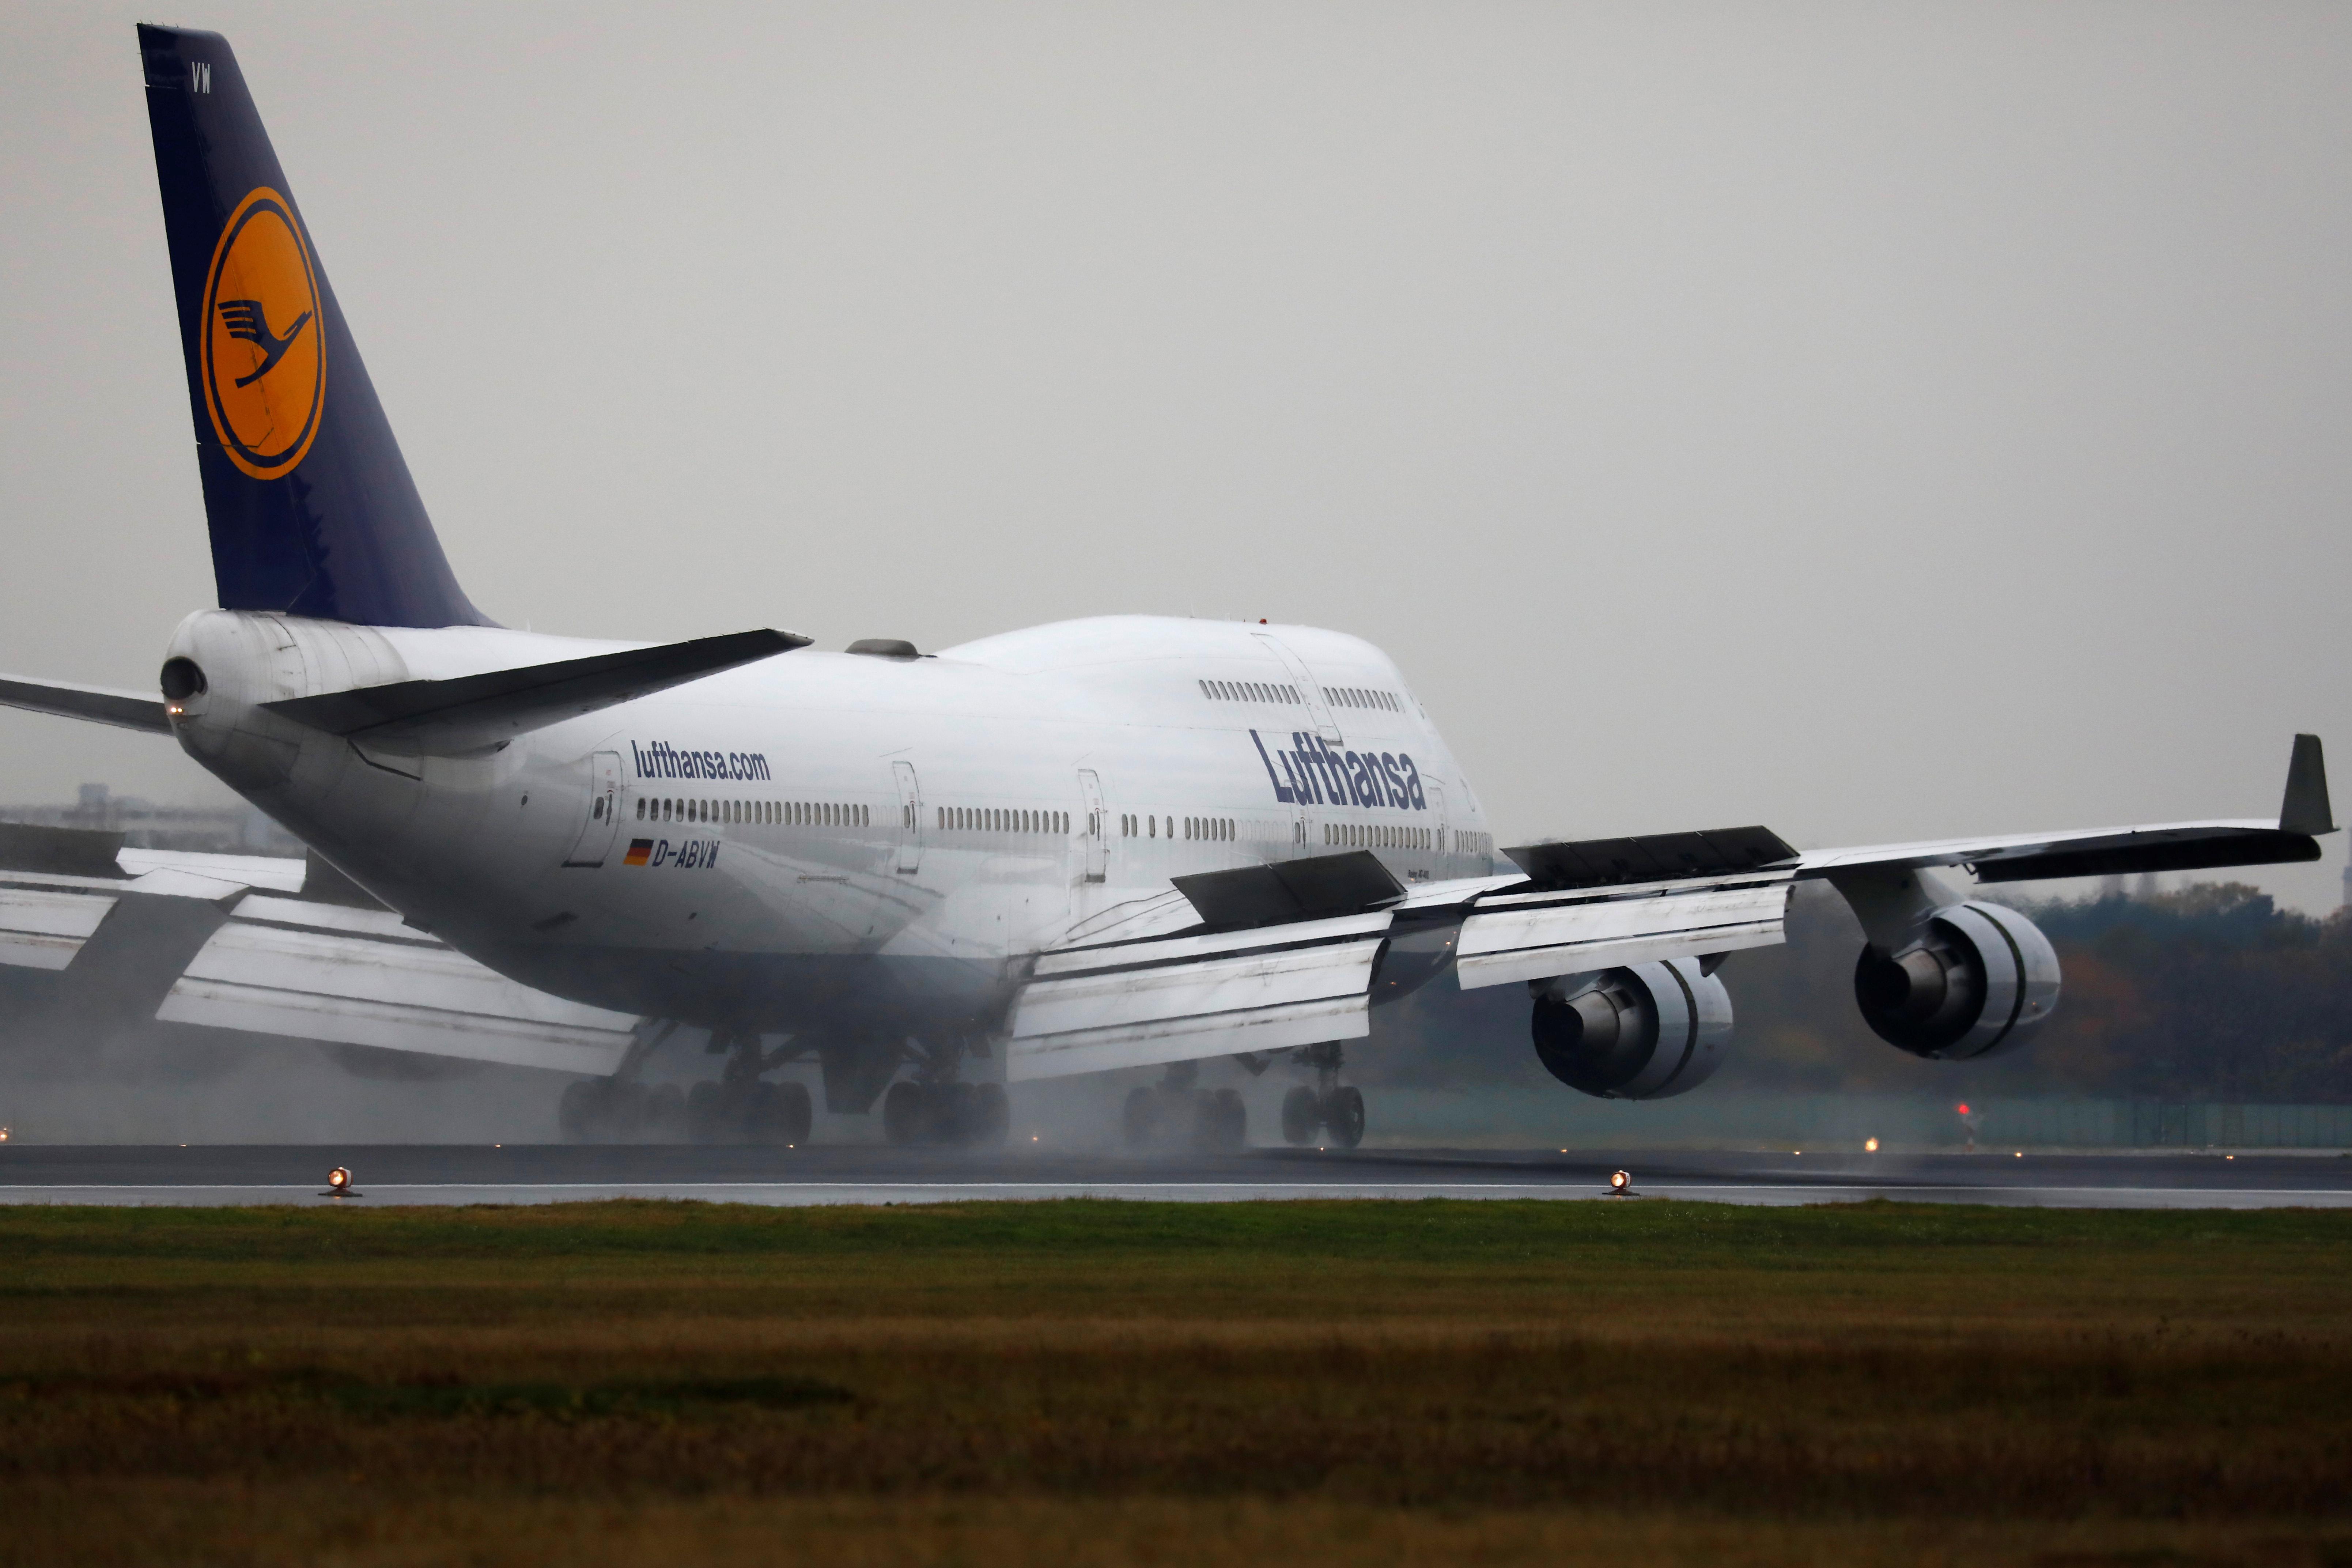 Lufthansa Boeing 747-400 jumbo jet is seen at Tegel airport in Berlin